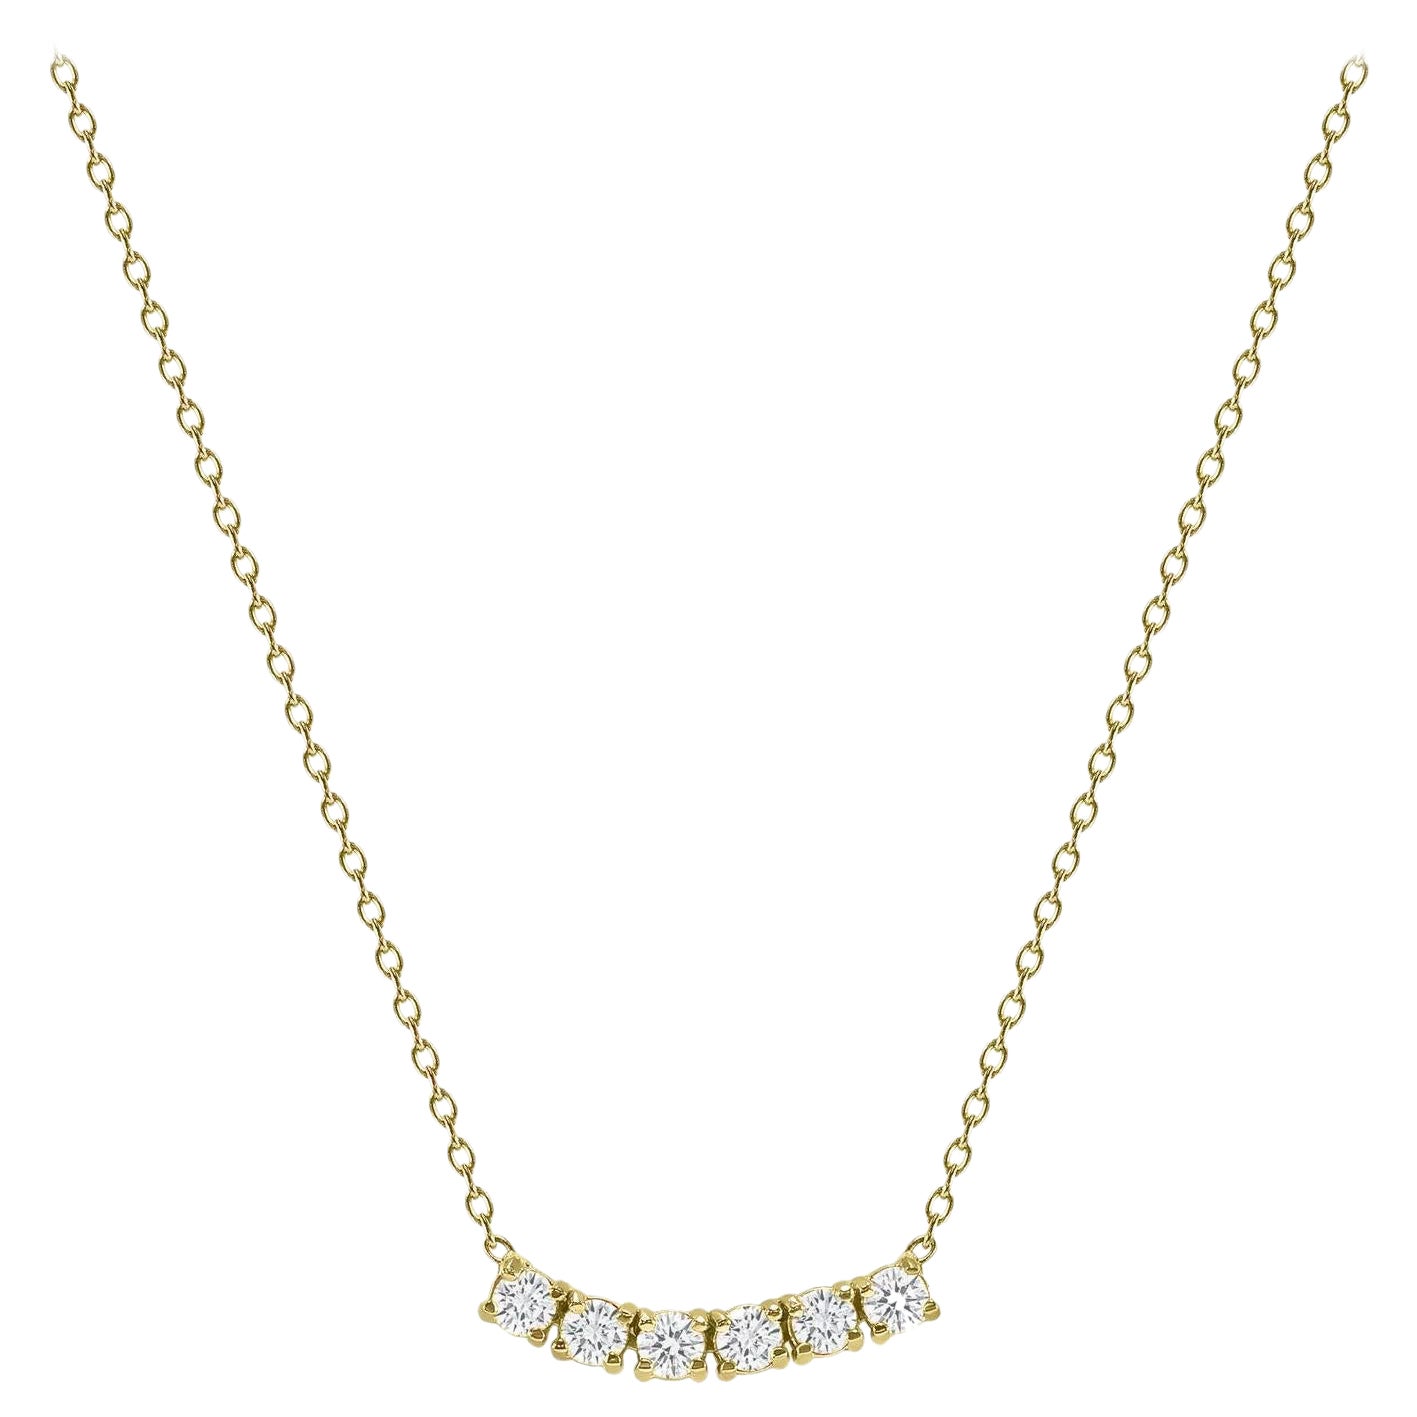 14k Yellow Gold 0.50 Carat Petite Round Diamond Six Stone Curved Necklace